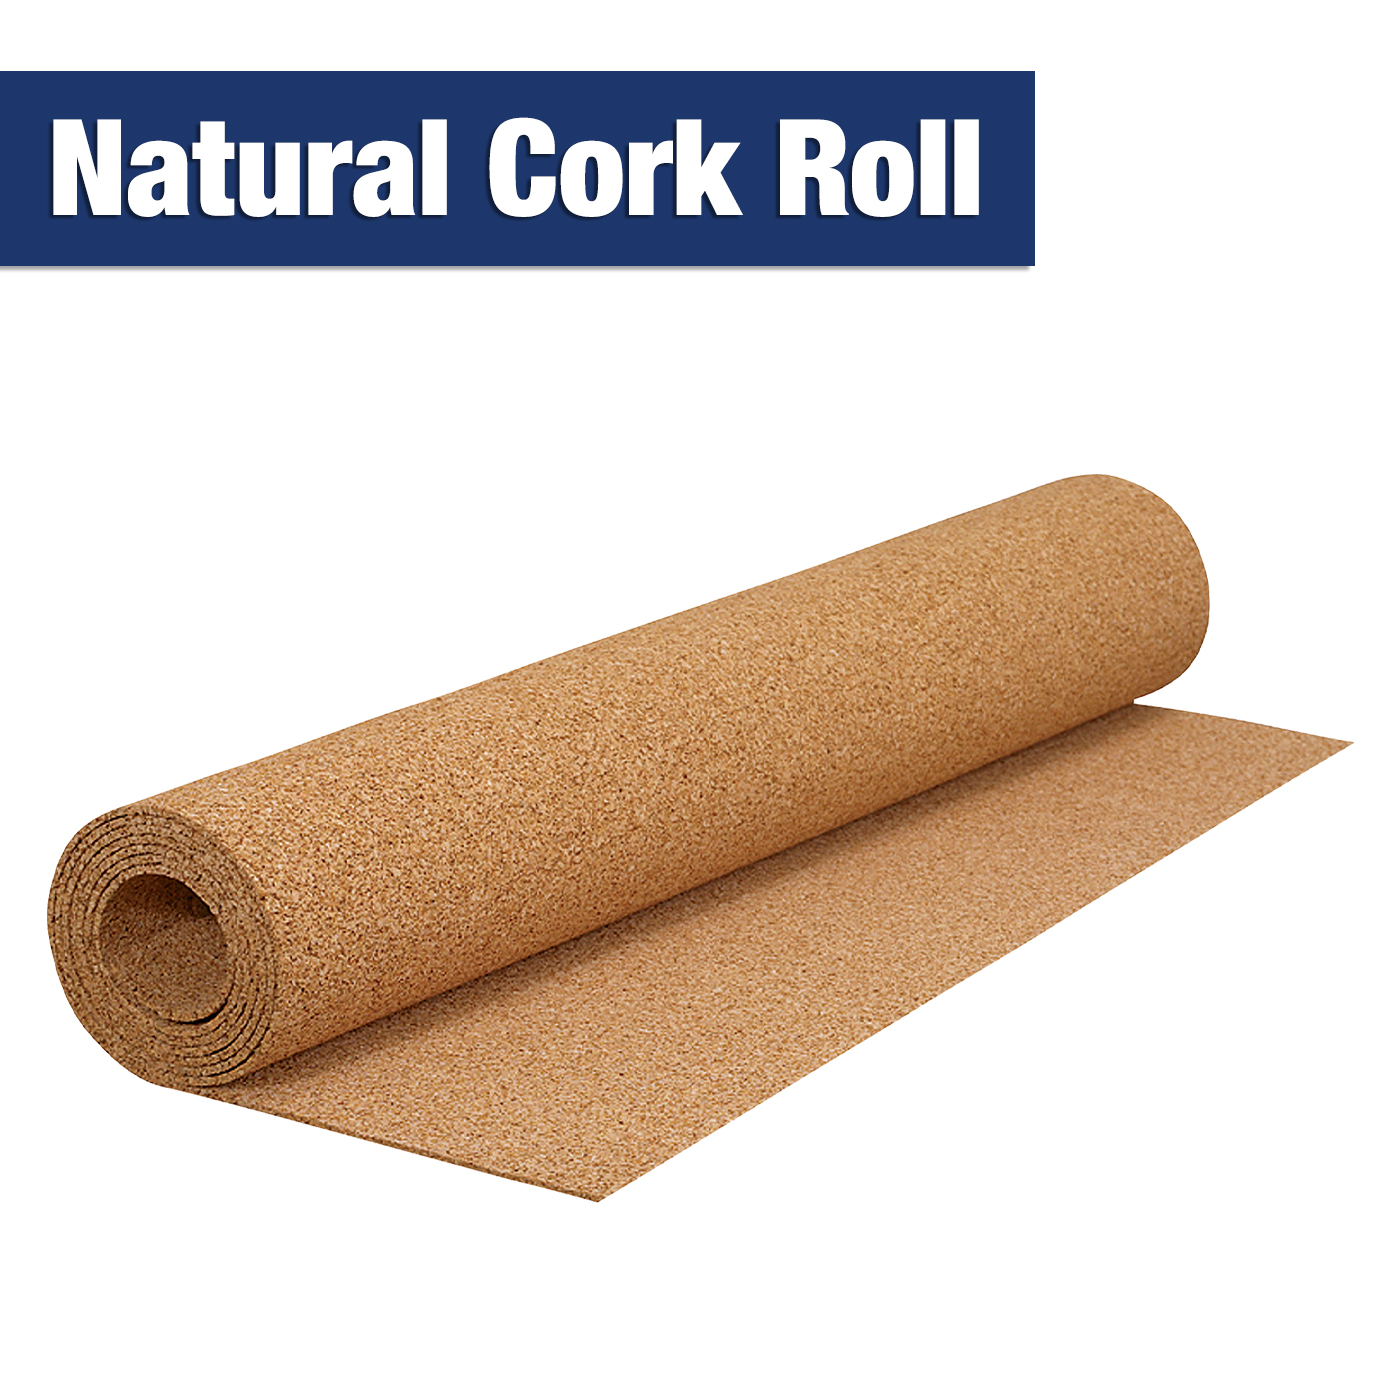 Natural Cork Roll - QEP